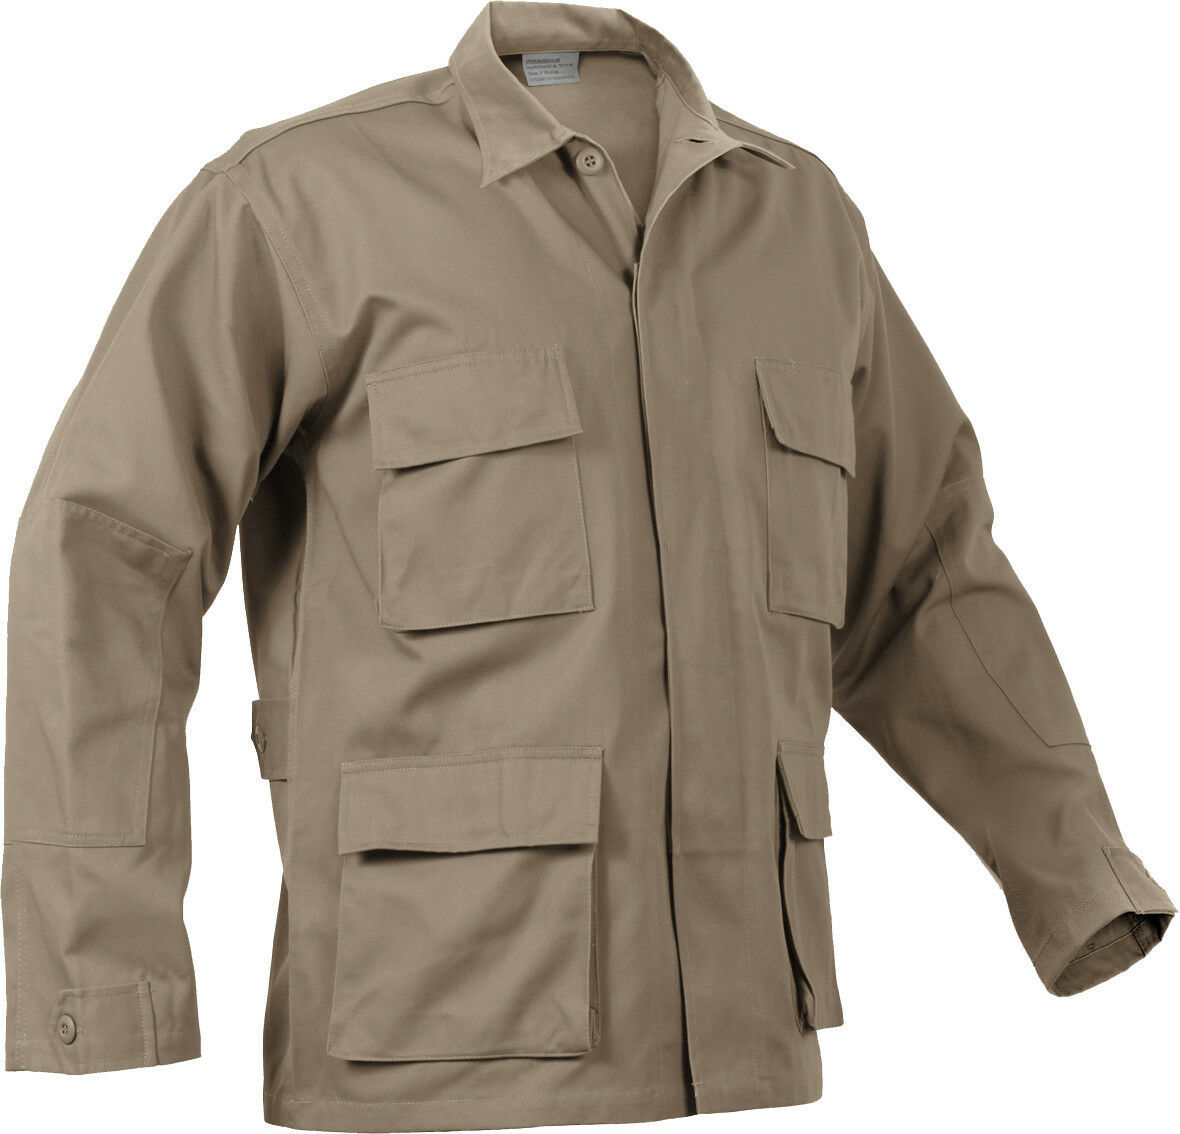 Mens Khaki Solid Long Sleeve Military BDU Shirt Coat Uniform Army ...